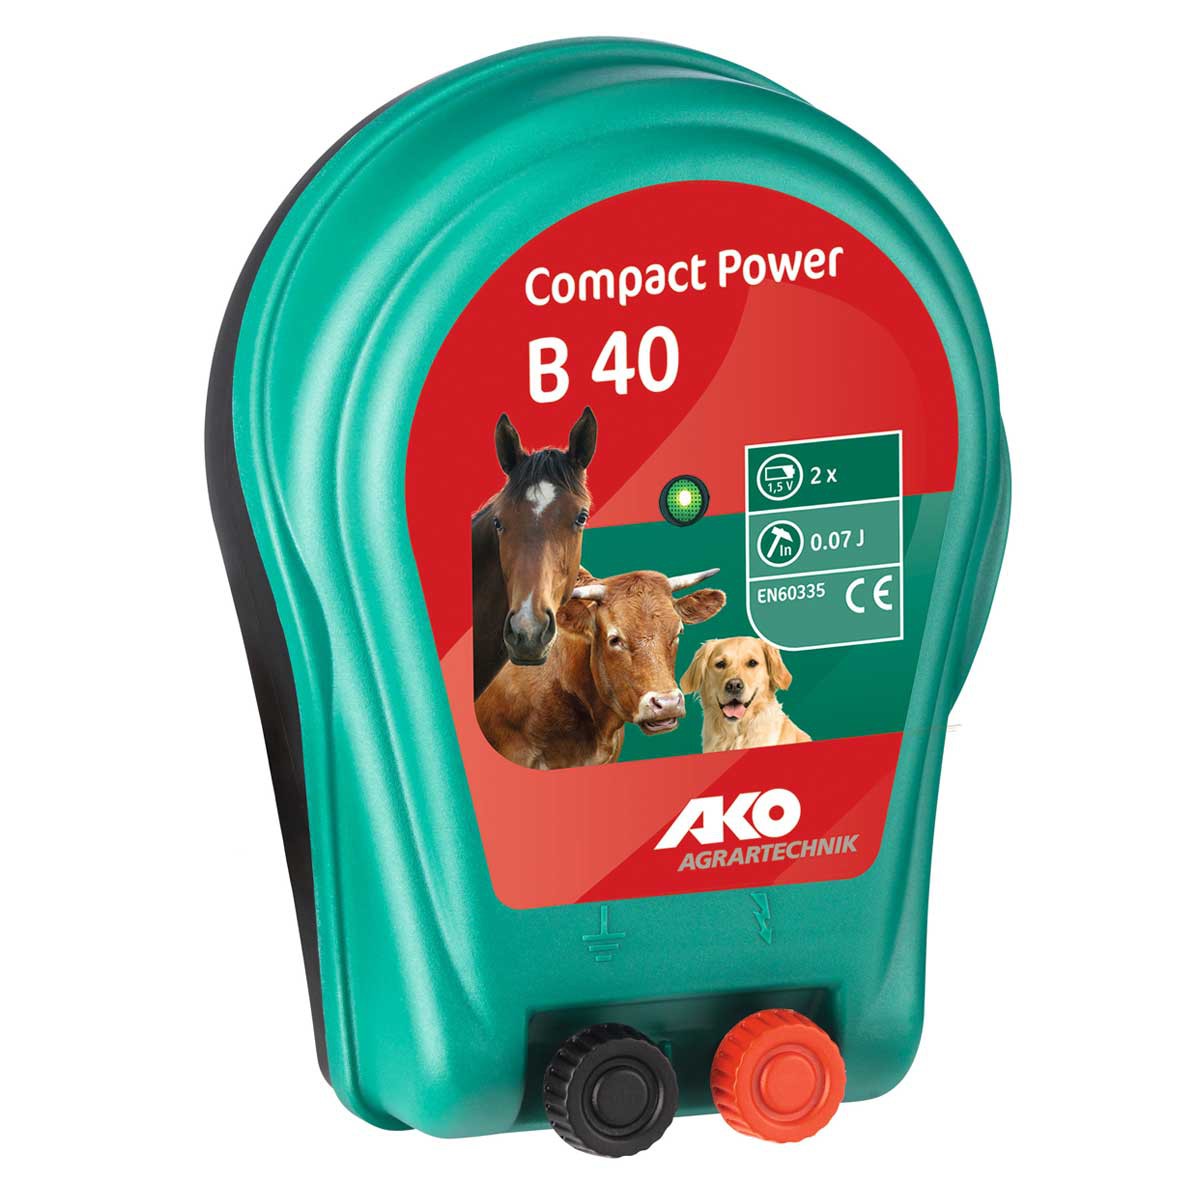 Unità batteria AKO Compact Power B40 3V, 0,07 Joule